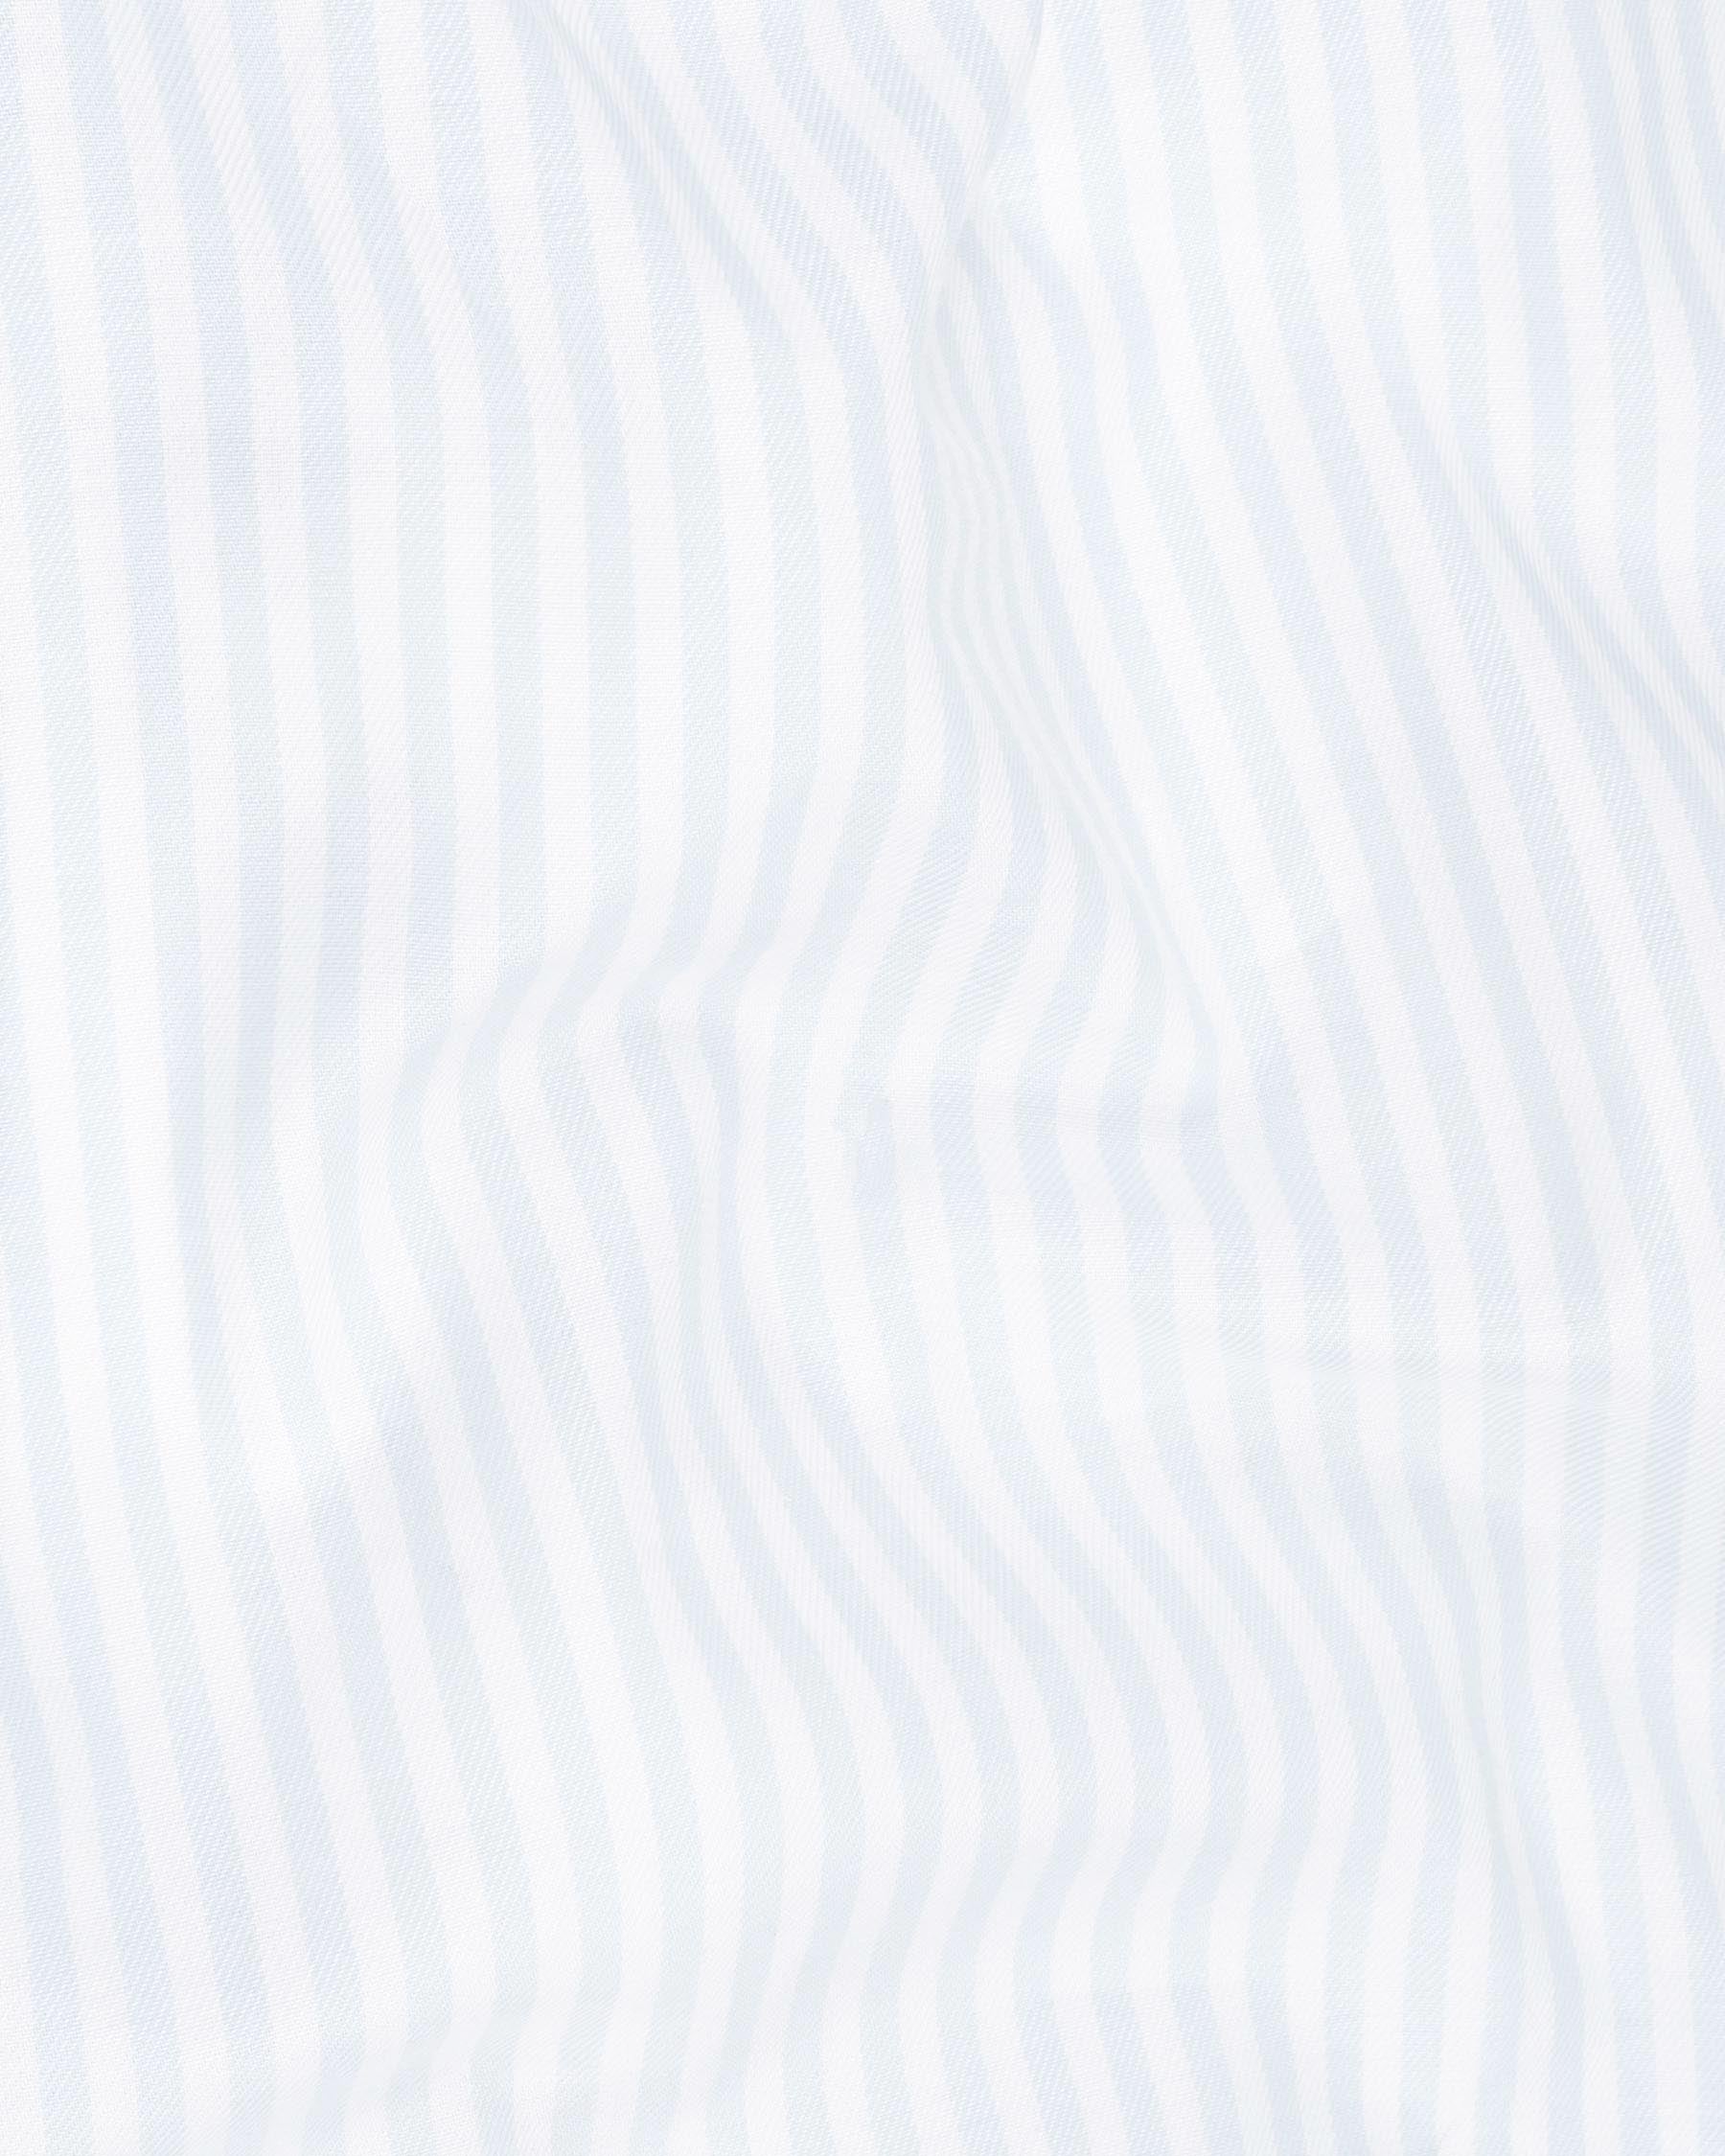 Bright White and Geyser Striped Twill Premium Cotton Shirt 6925-38, 6925-H-38, 6925-39, 6925-H-39, 6925-40, 6925-H-40, 6925-42, 6925-H-42, 6925-44, 6925-H-44, 6925-46, 6925-H-46, 6925-48, 6925-H-48, 6925-50, 6925-H-50, 6925-52, 6925-H-52